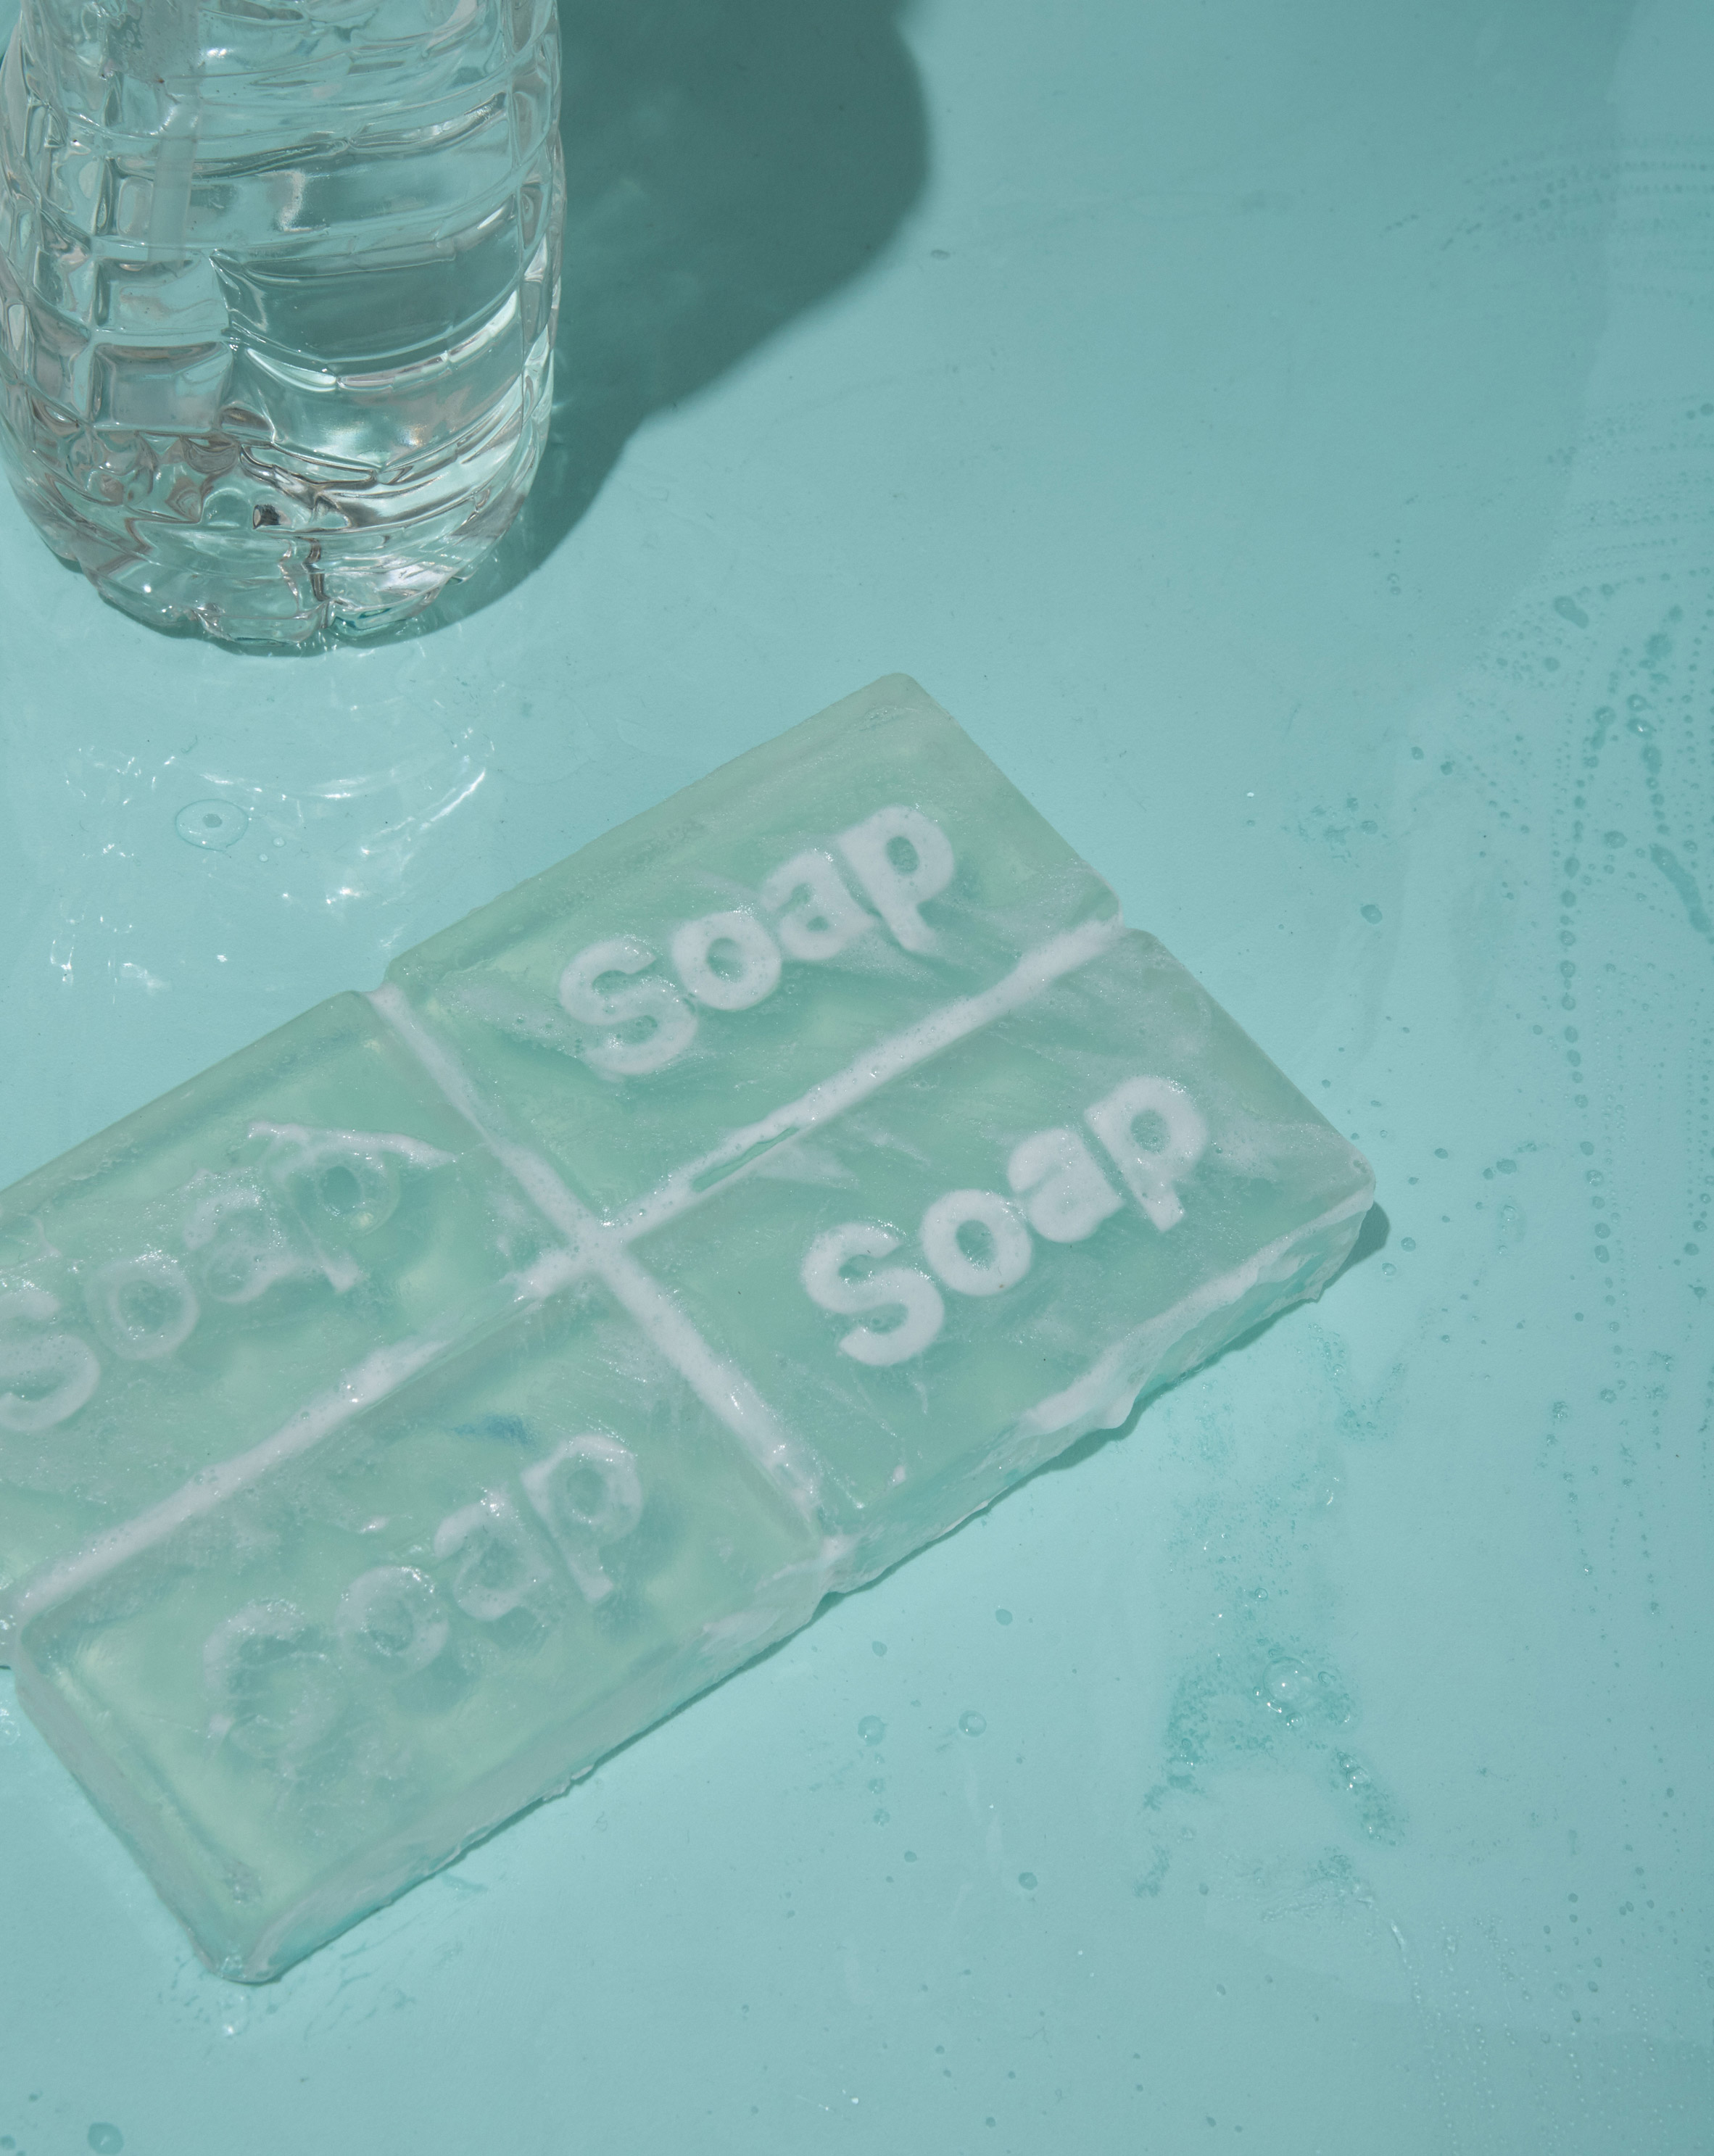 Soap by Jasper Morrison x Good Thing